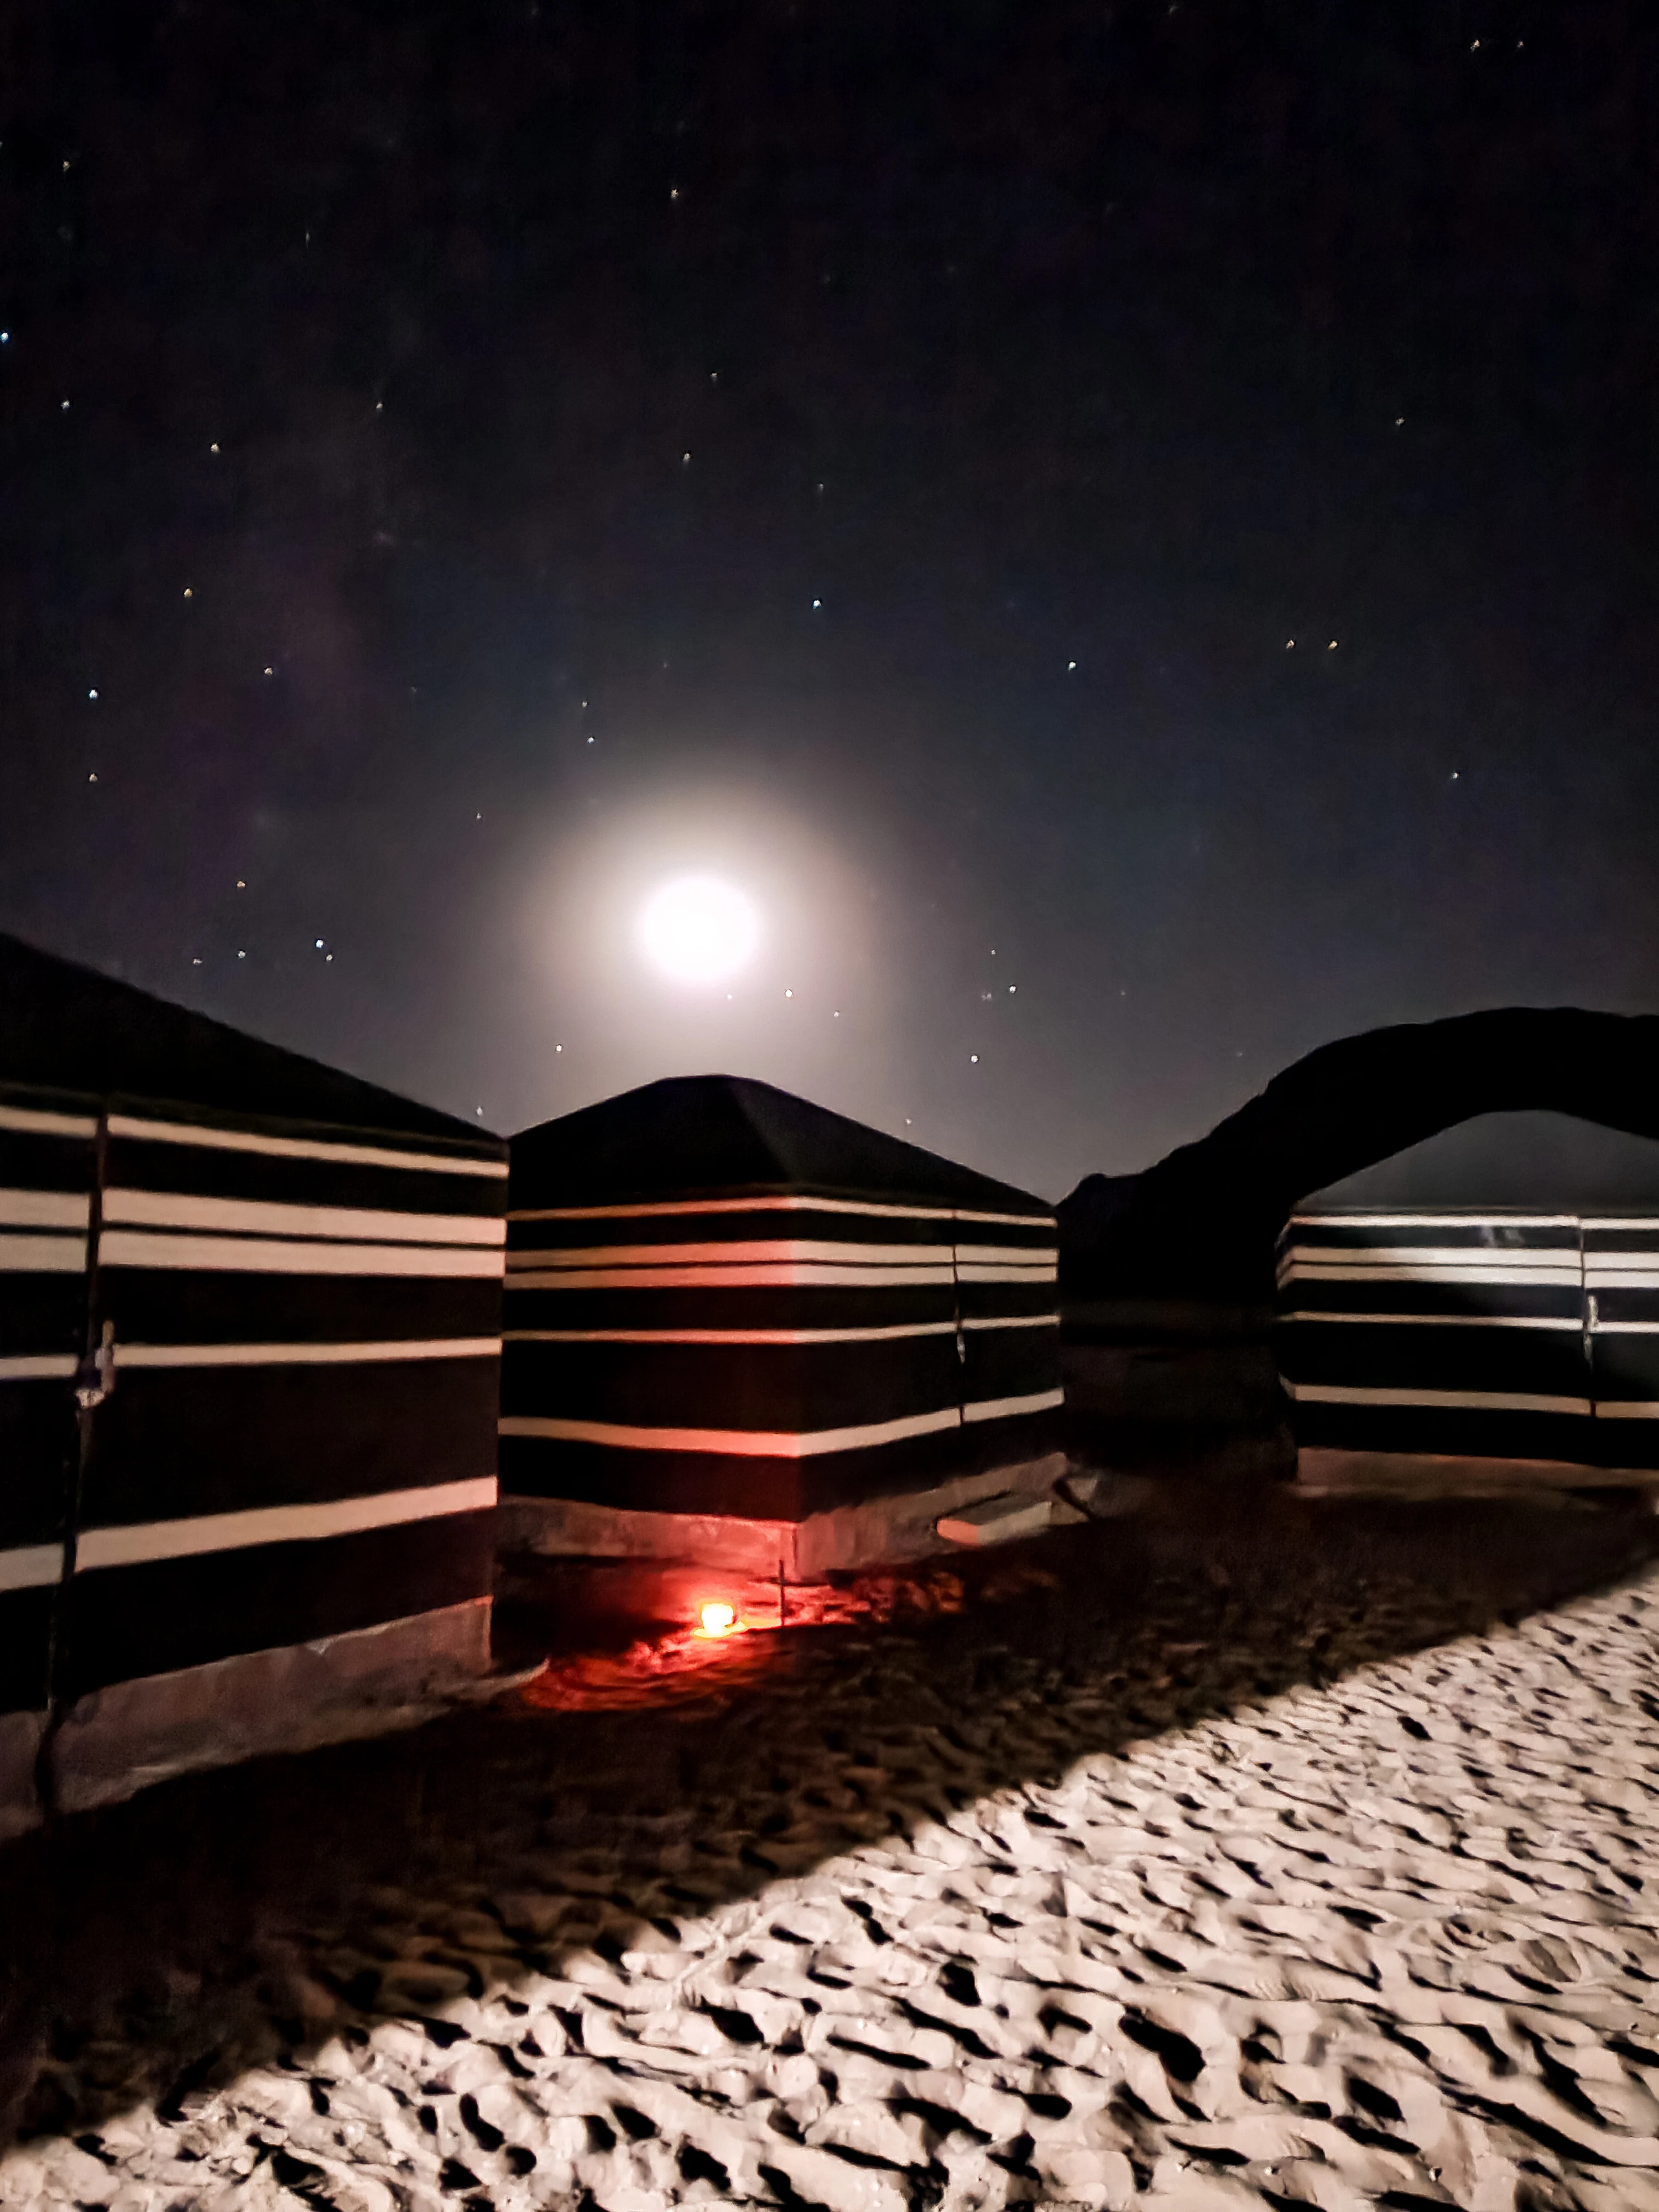 Our camp at night, Wadi Rum